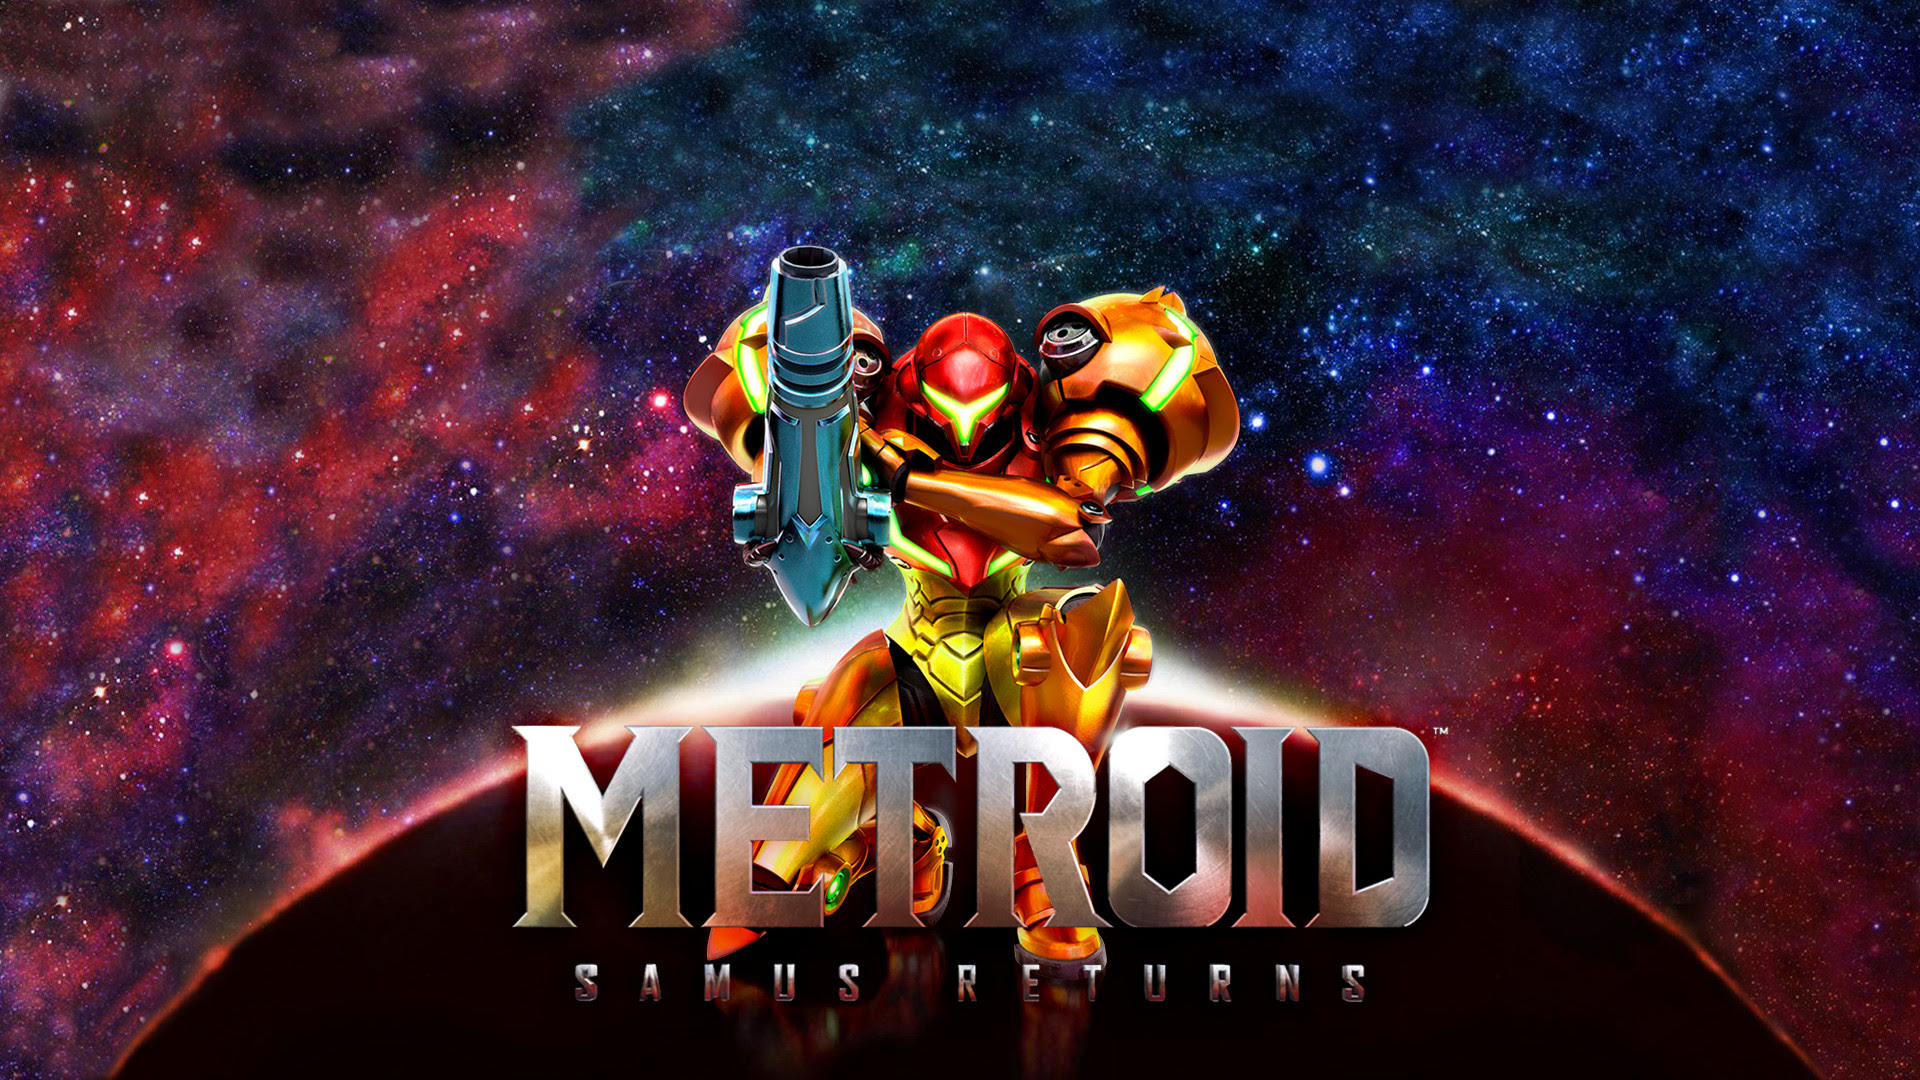 Metroid Phone Wallpaper (65+ images)